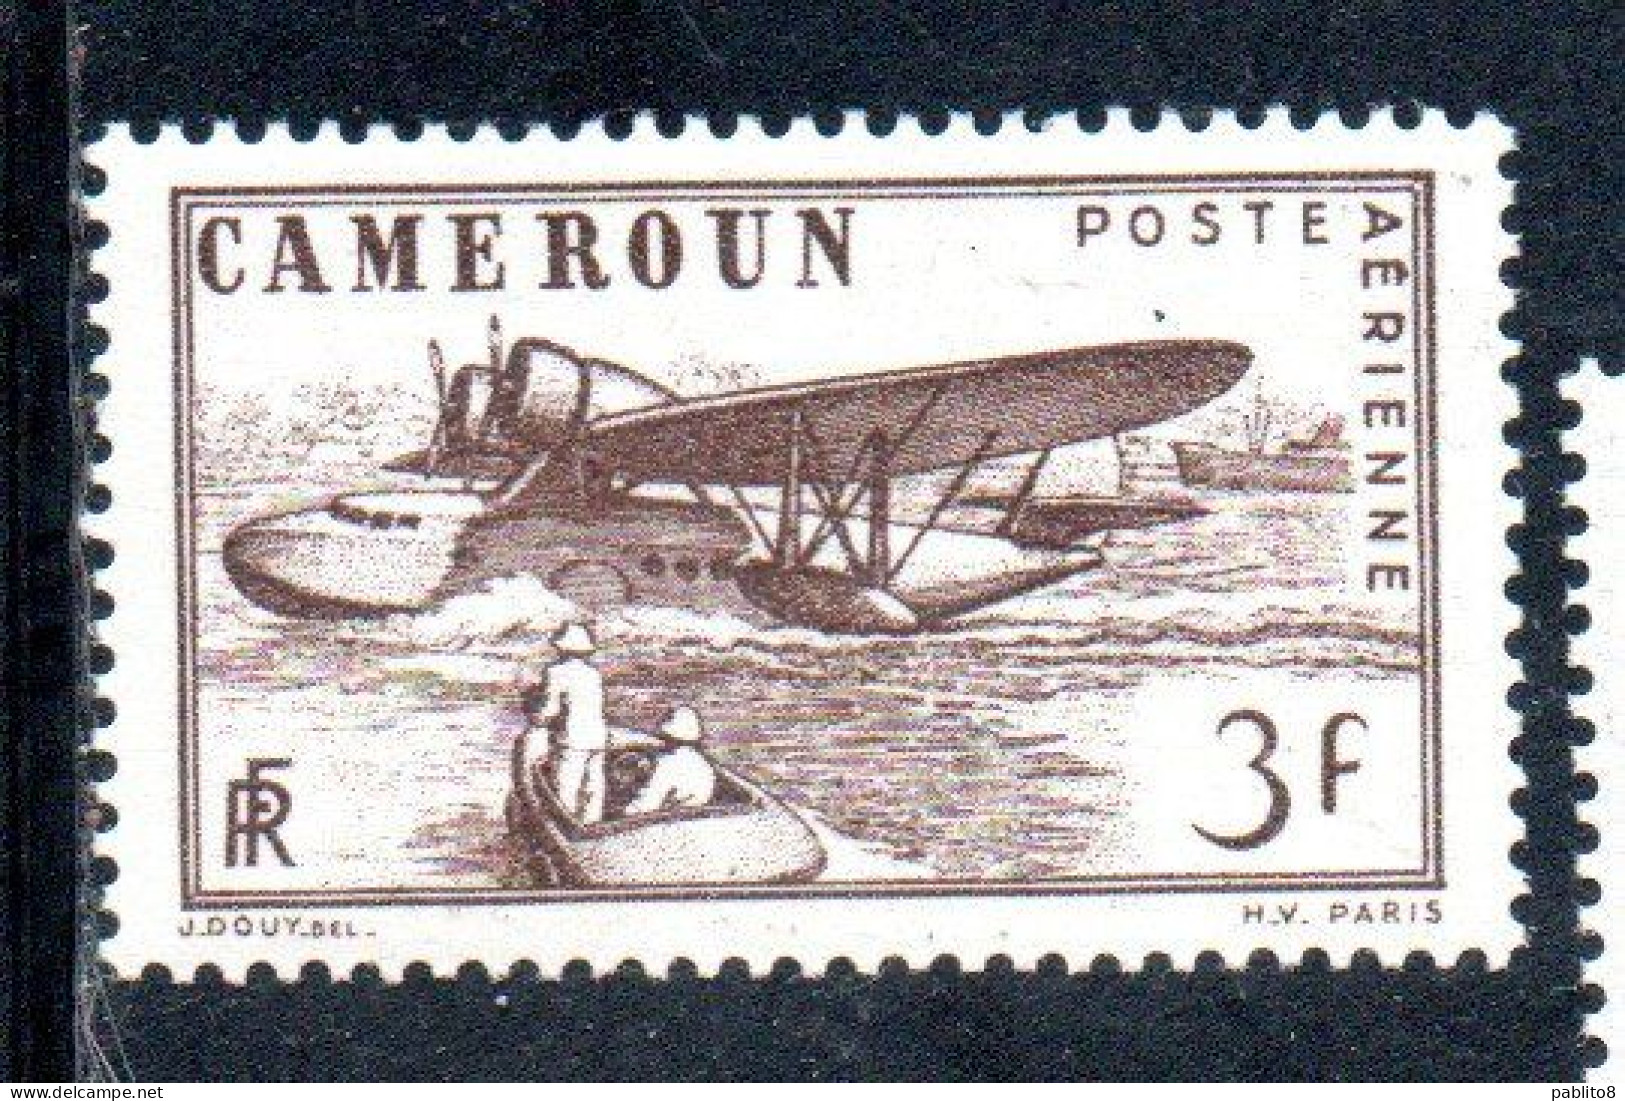 CAMEROUN CAMERUN 1943 1944 AIR POST MAIL AIRMAIL POSTA AEREA POST AERIENNE SEAPLANE ALIGHTING 3fr MNH - Airmail